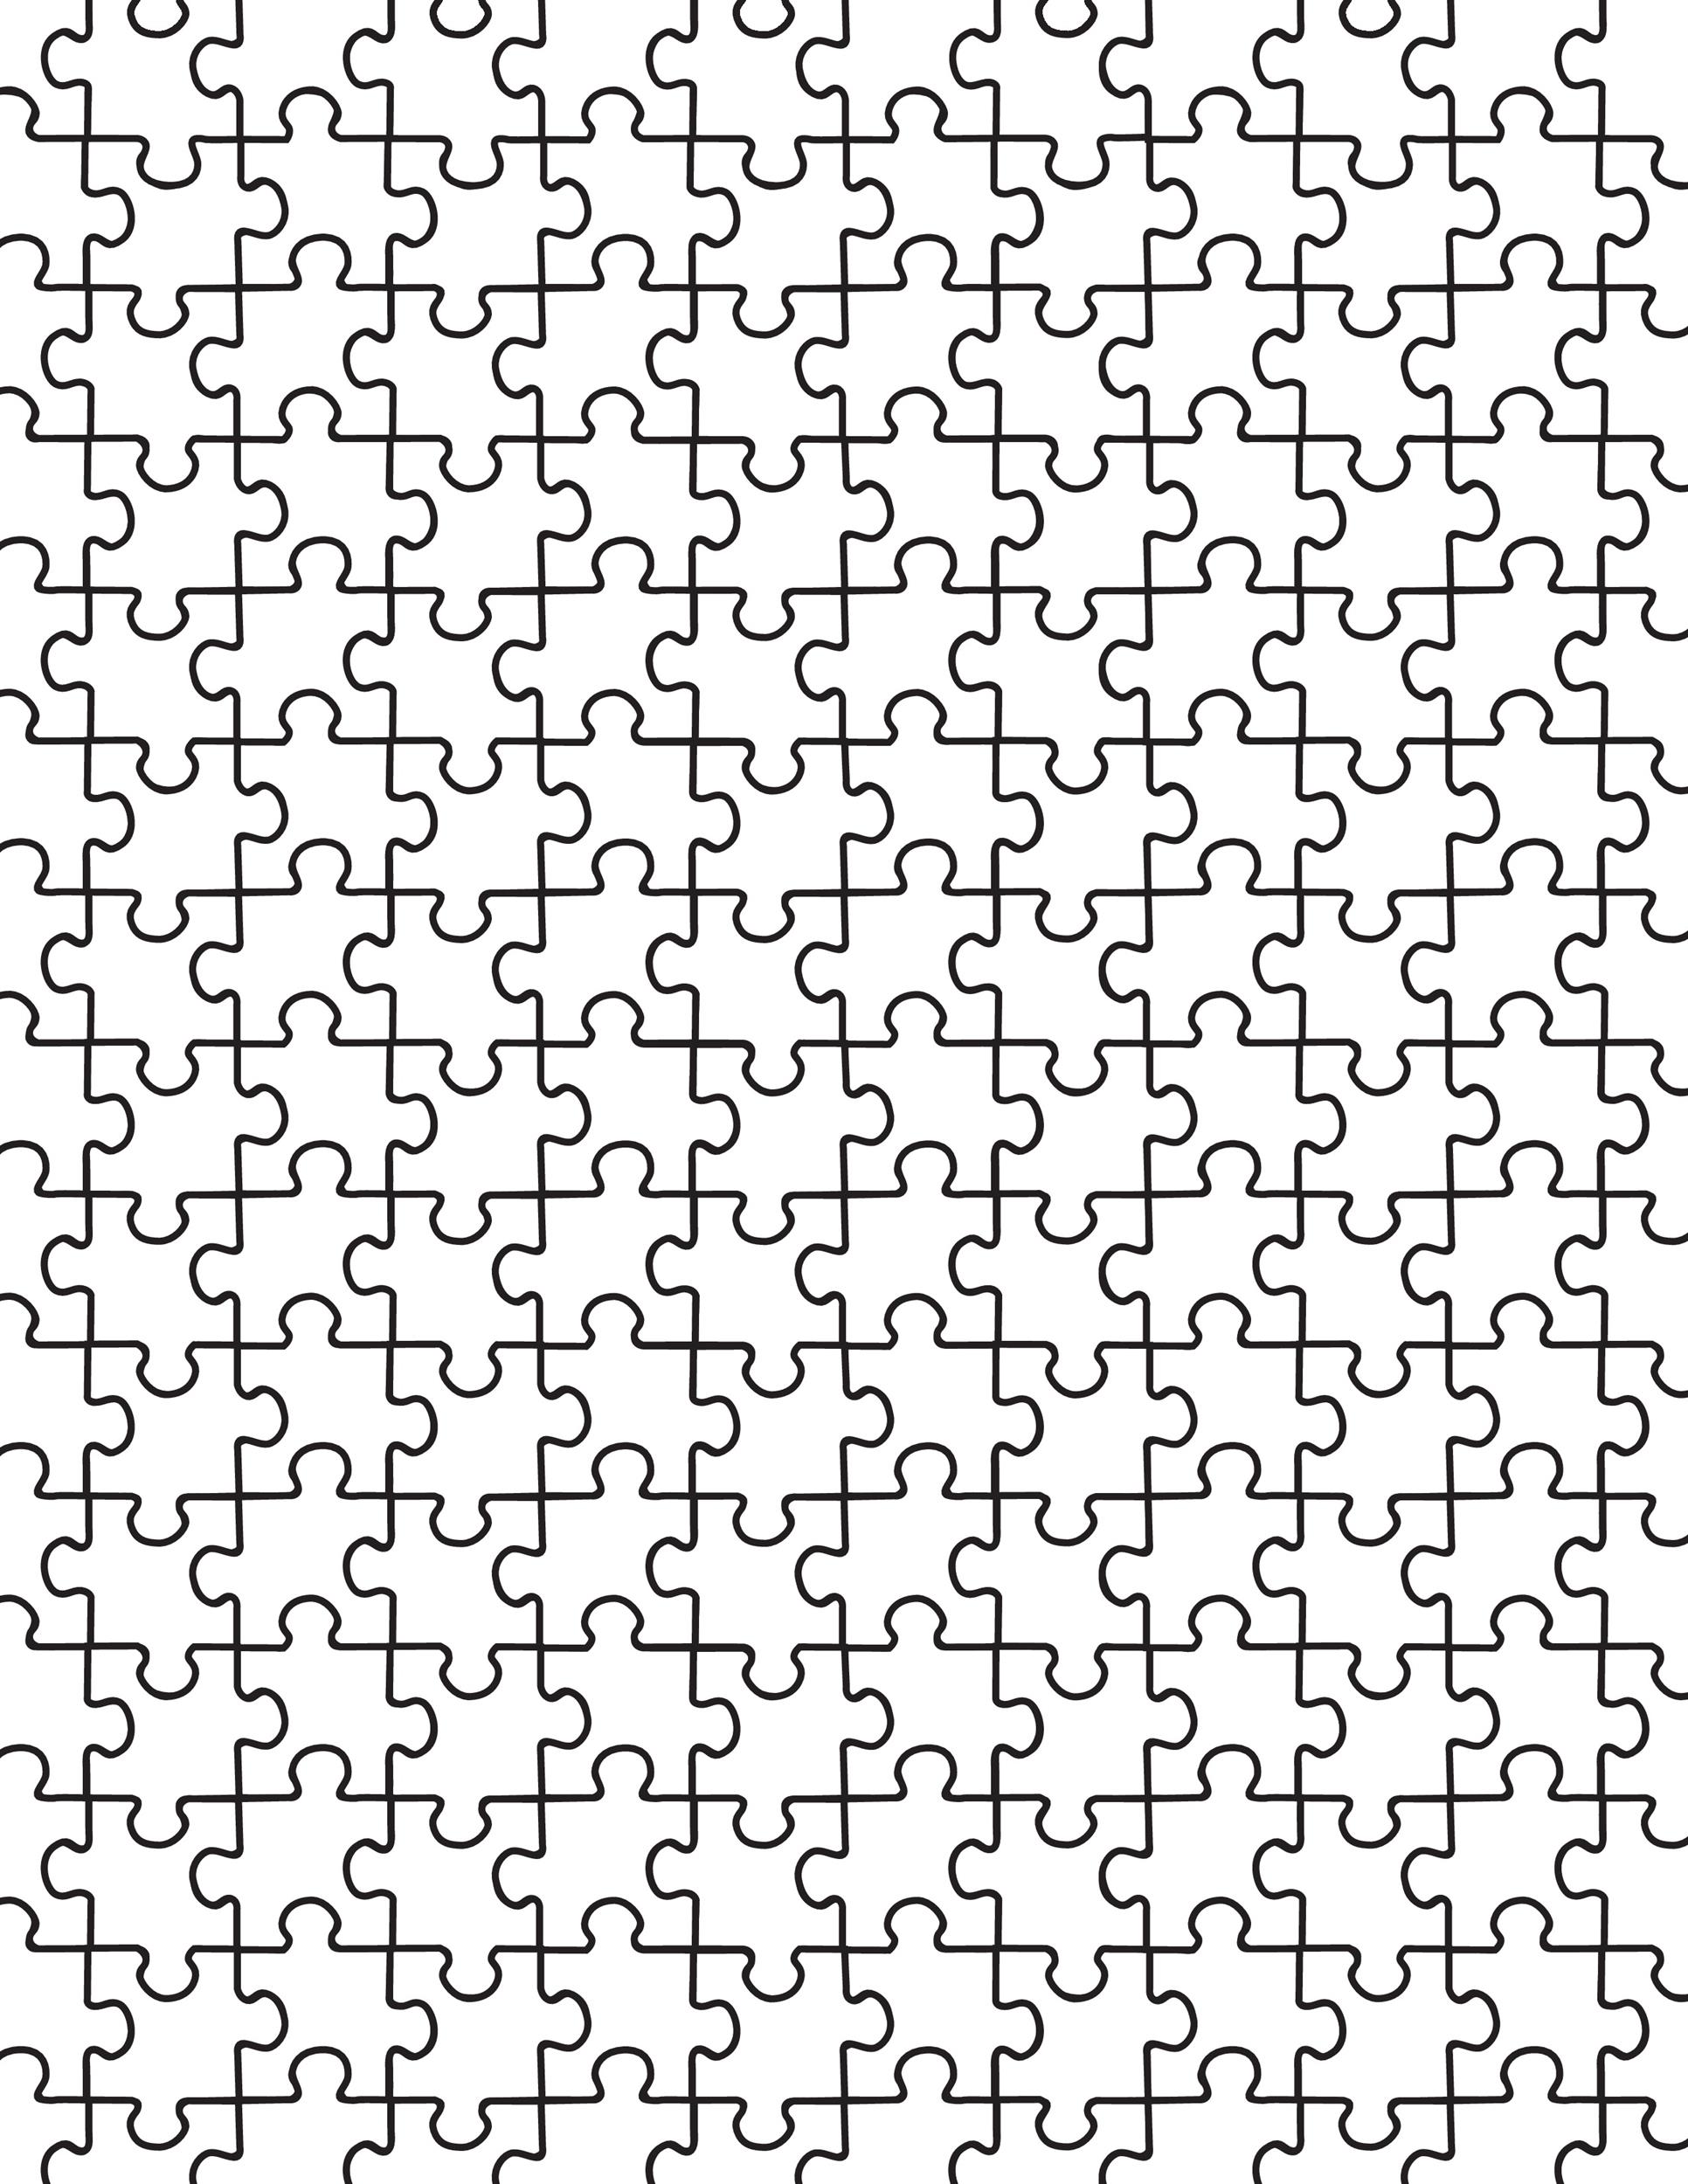 19 Printable Puzzle Piece Templates Template Lab